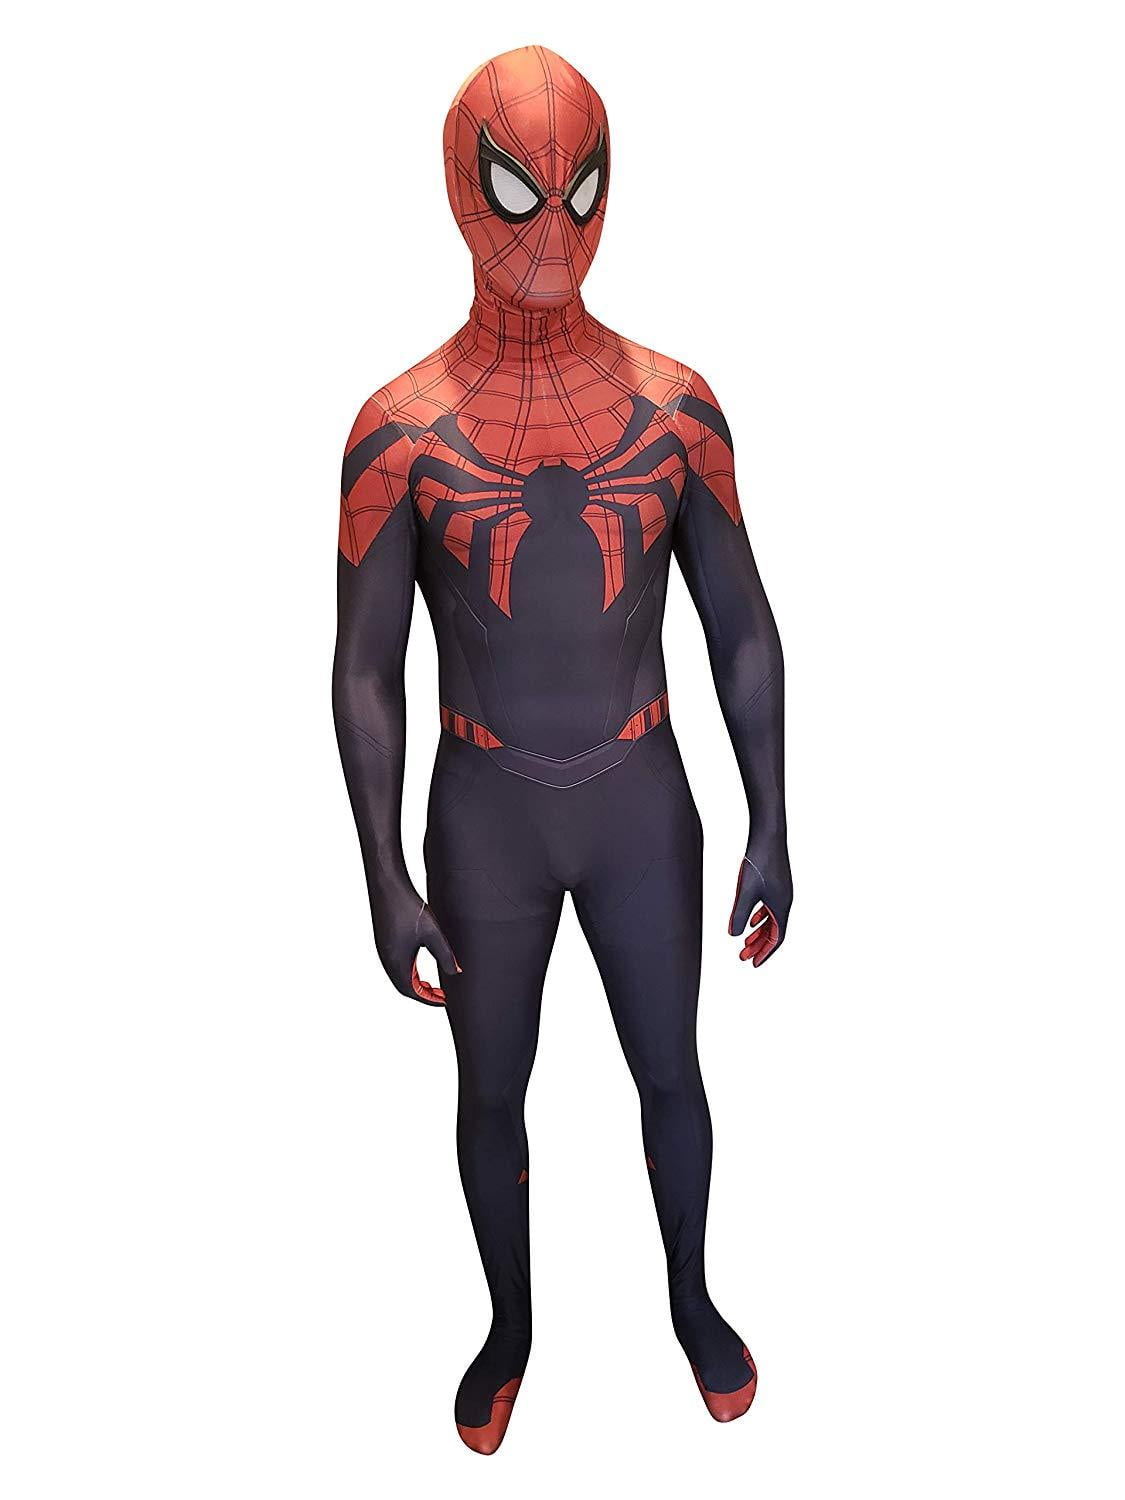 Details about   Spiderman Homecoming Superhero Costume Adult Child Halloween Spandex Bodysuit 